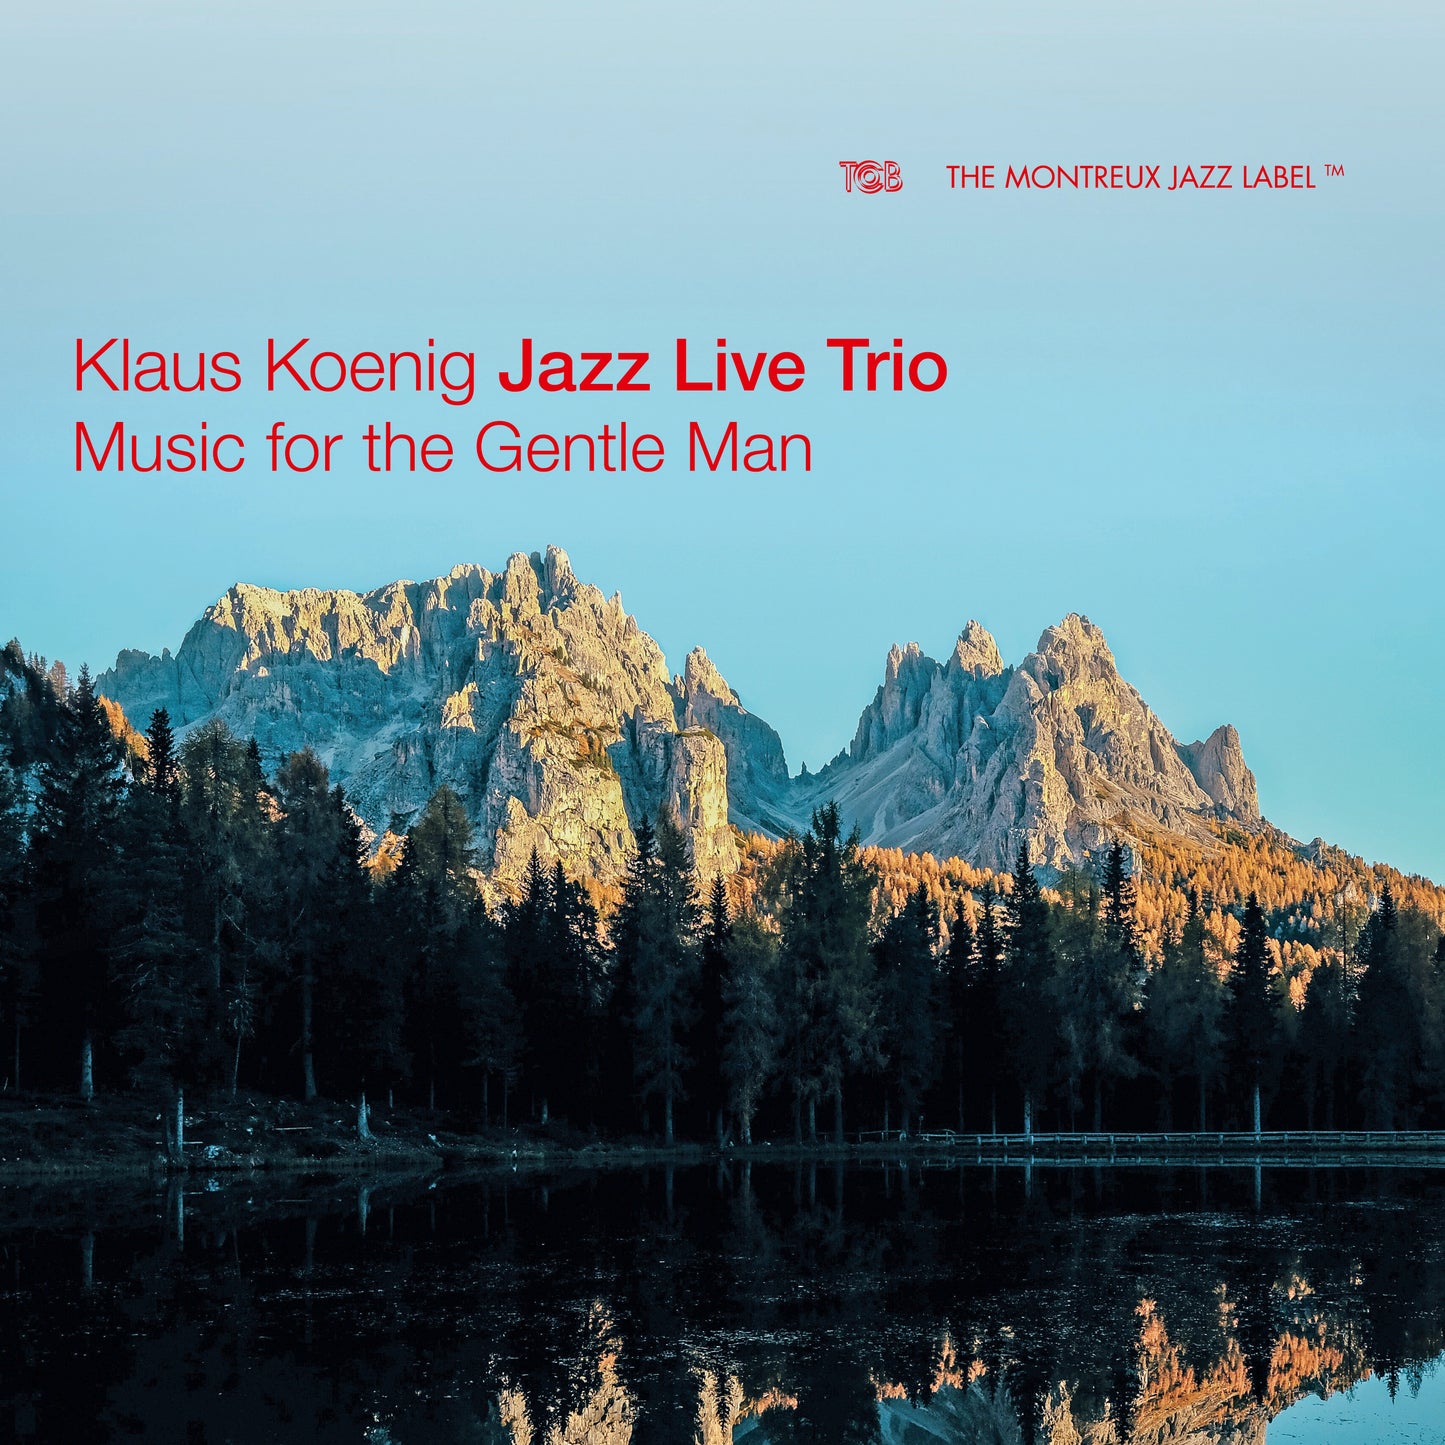 Music for the Gentle Man / Klaus Koenig Jazz Live Trio